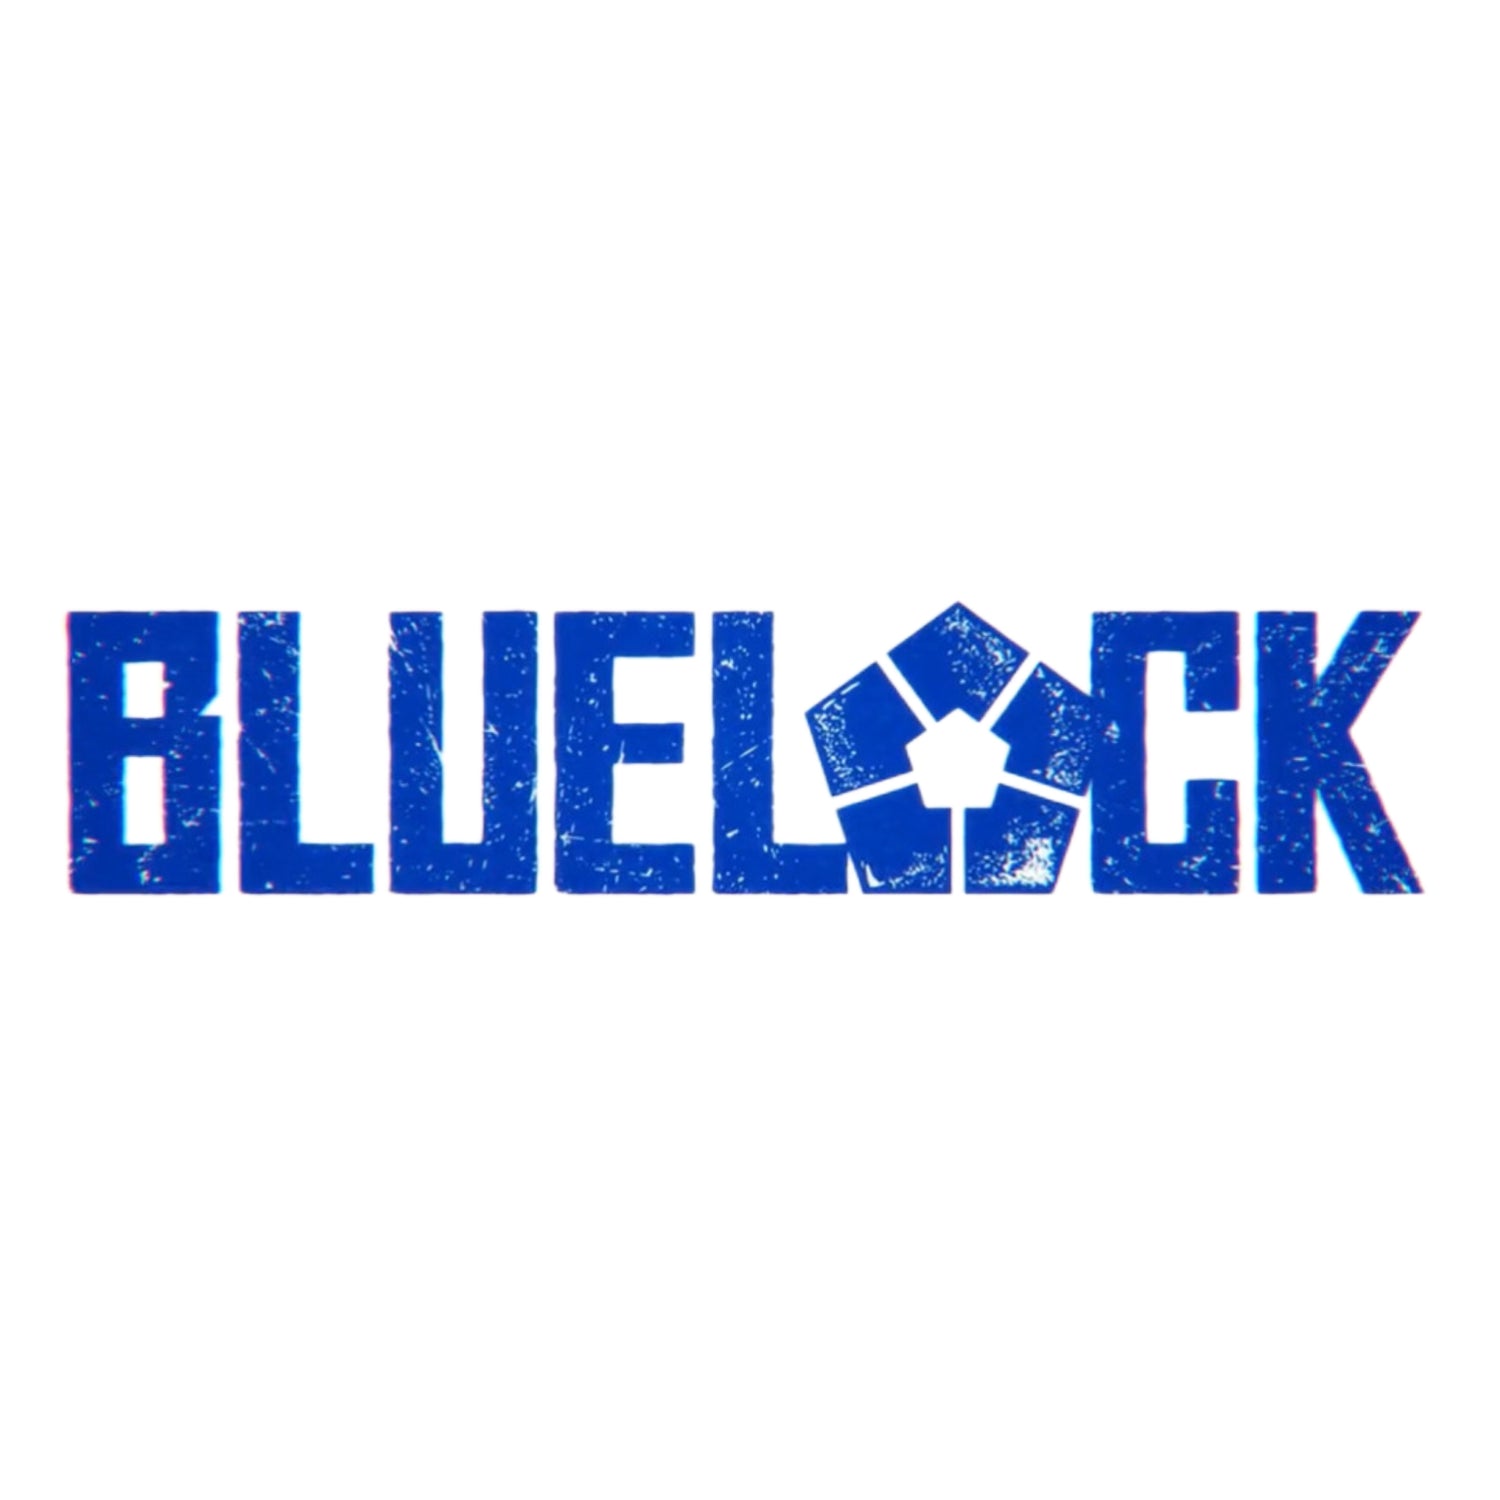 BLUE LOCK